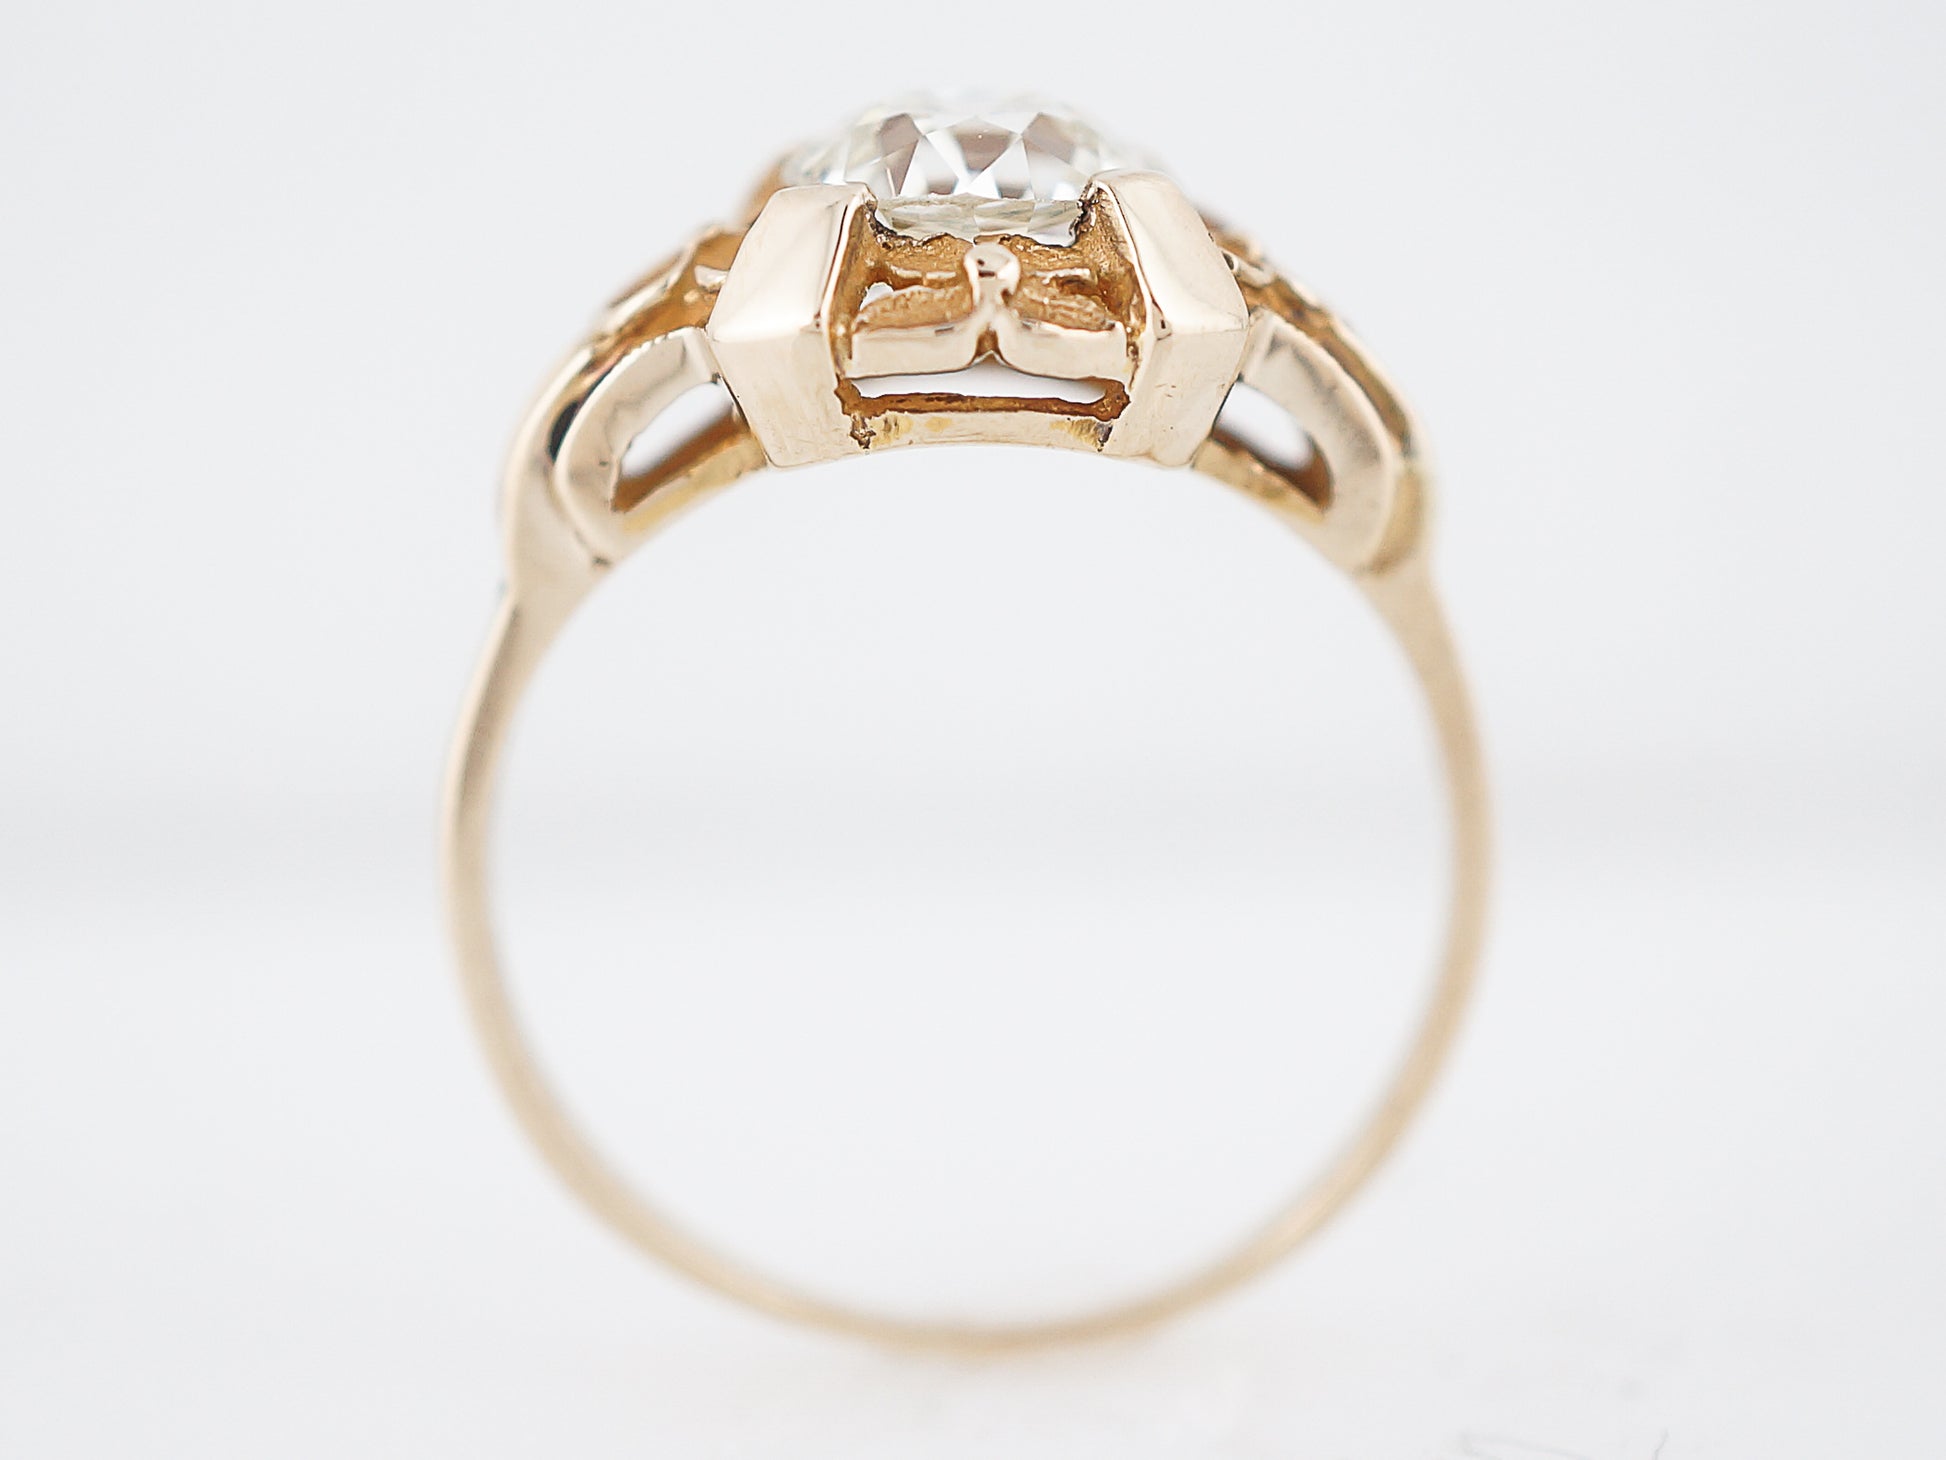 Antique Enagagement Ring Art Deco 1.00 Old European Cut Diamond in 14k Yellow Gold